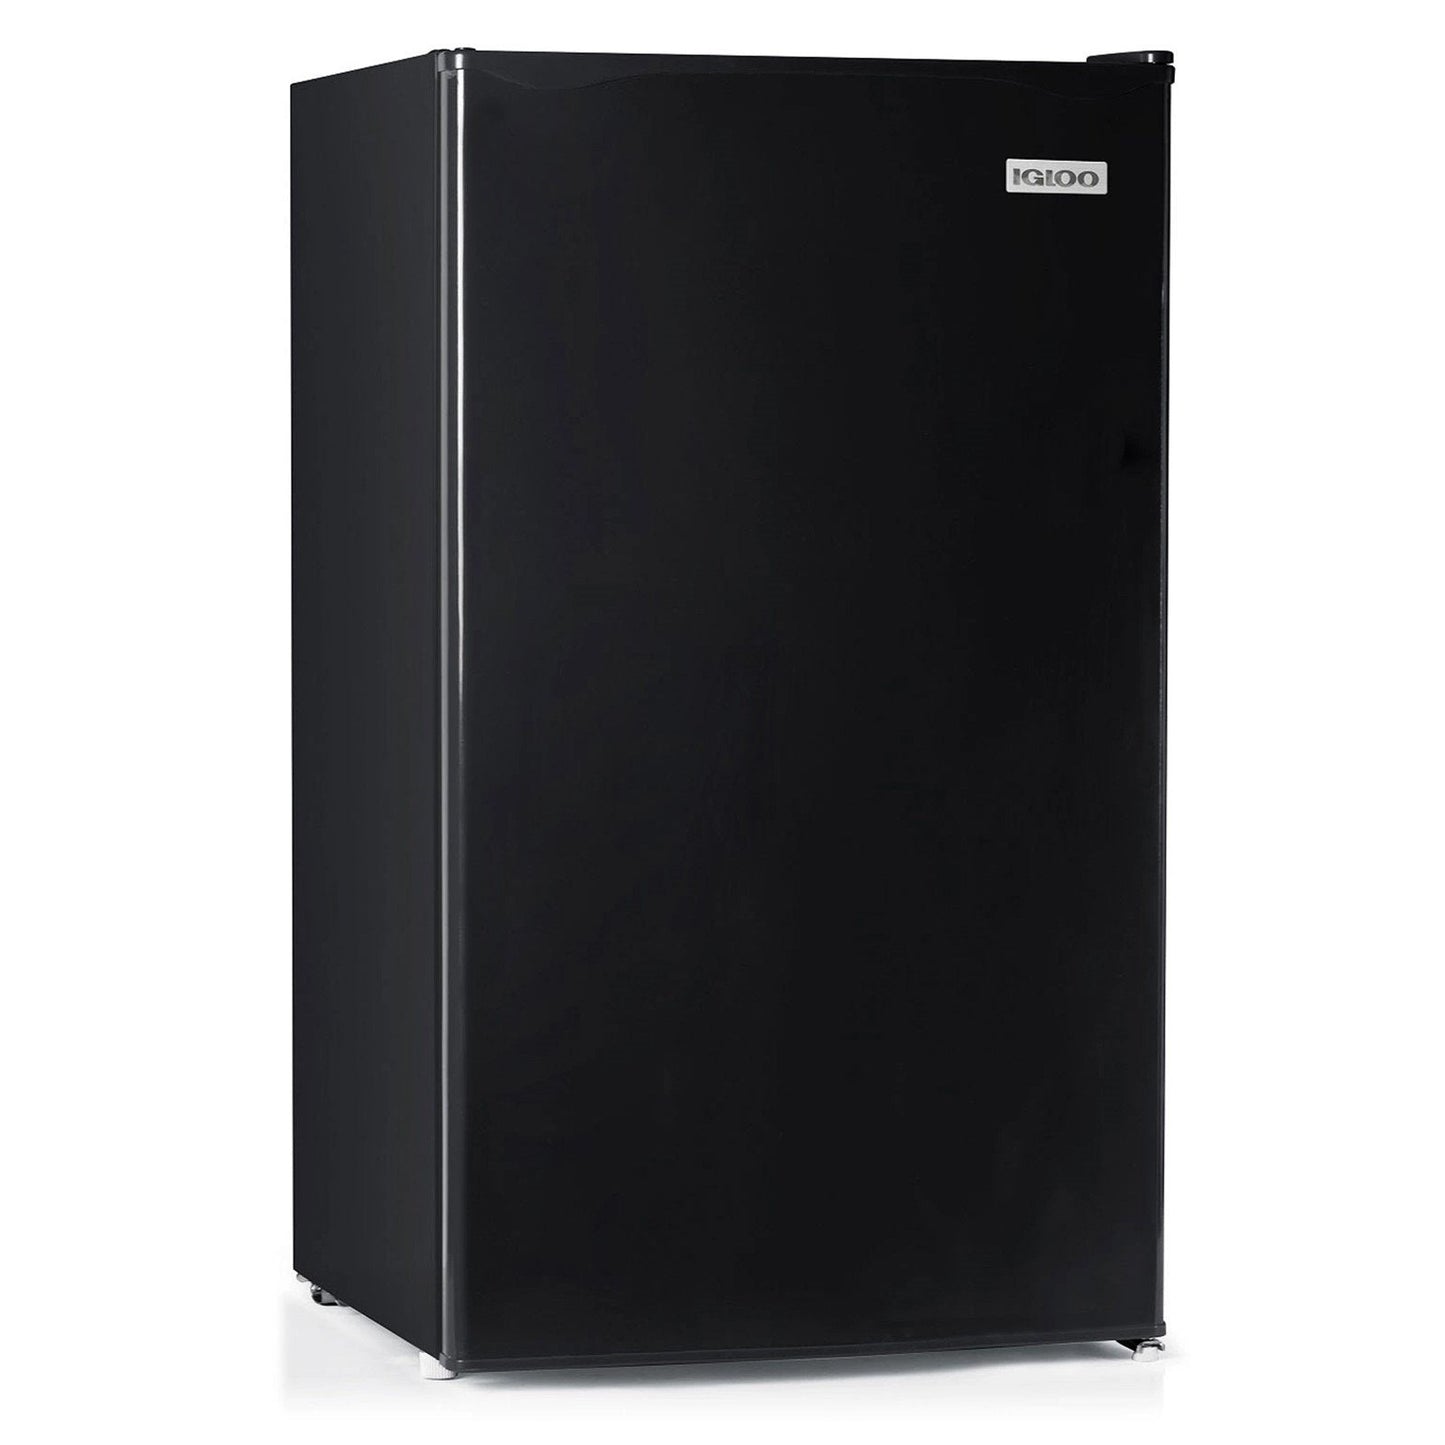 Igloo Compact Refrigerator Freezer 3.2 cu. ft. Small Mini Dorm Fridge Black